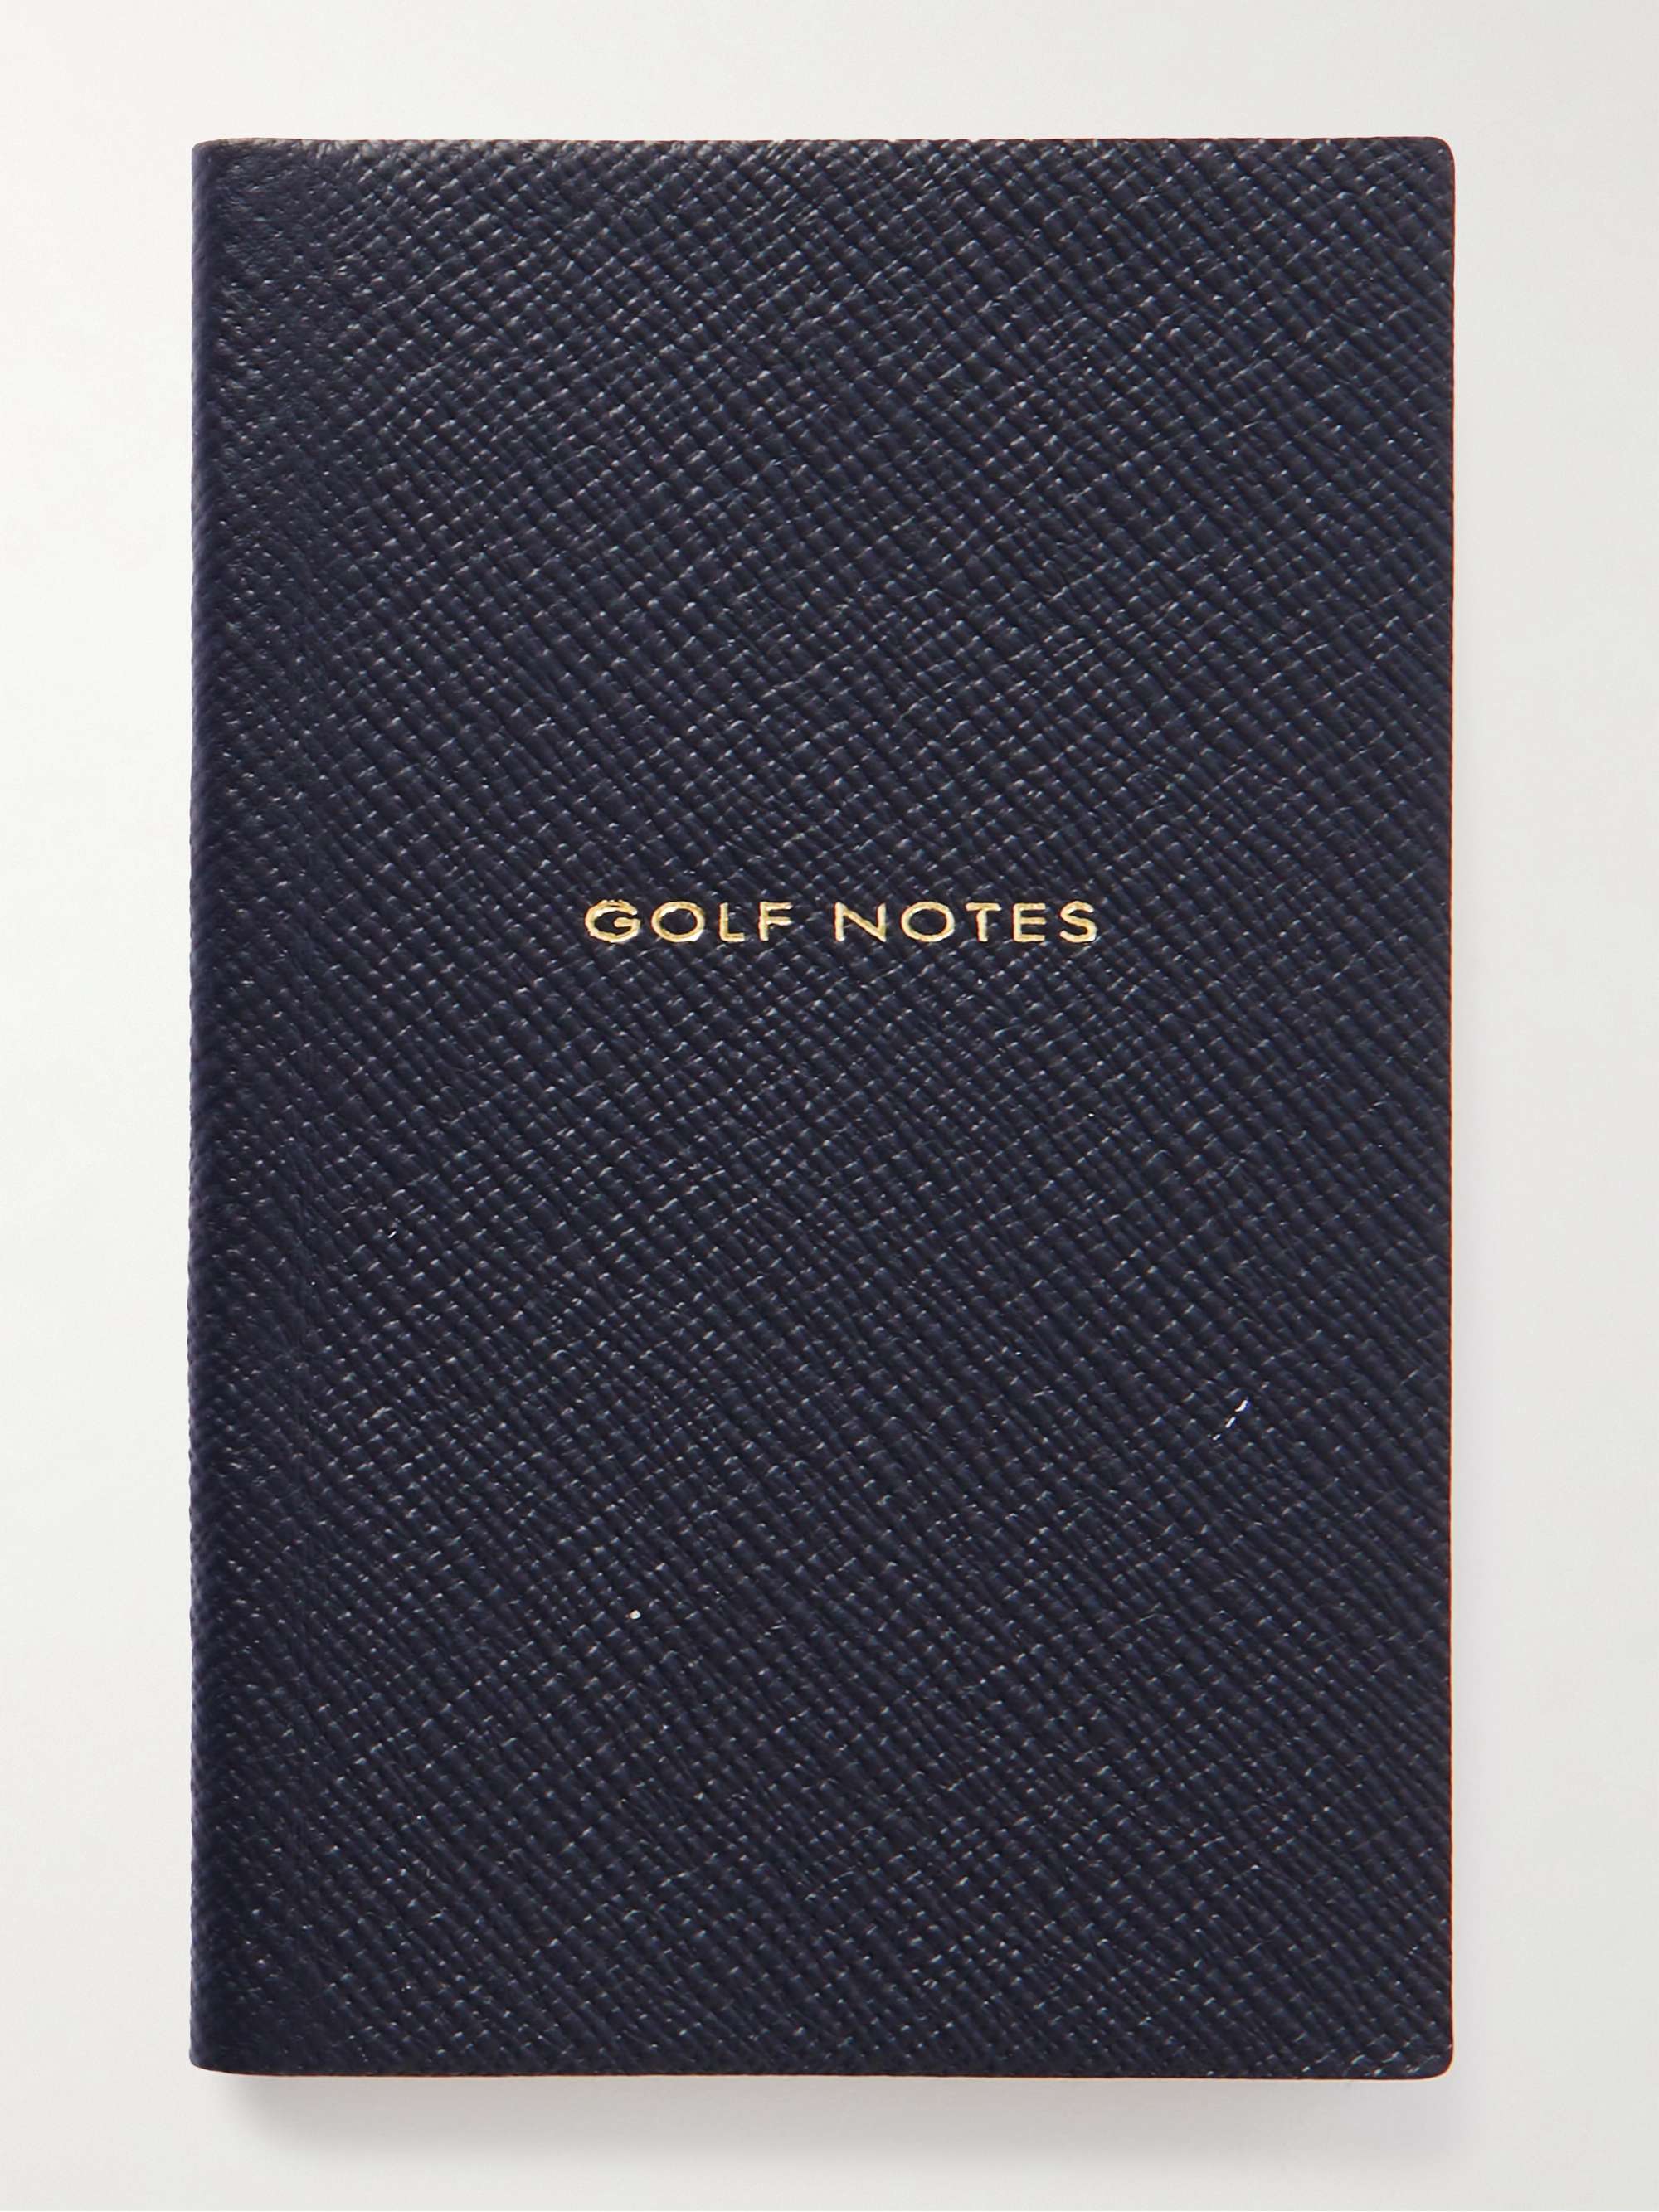 SMYTHSON Panama Golf Notes Cross-Grain Leather Notebook